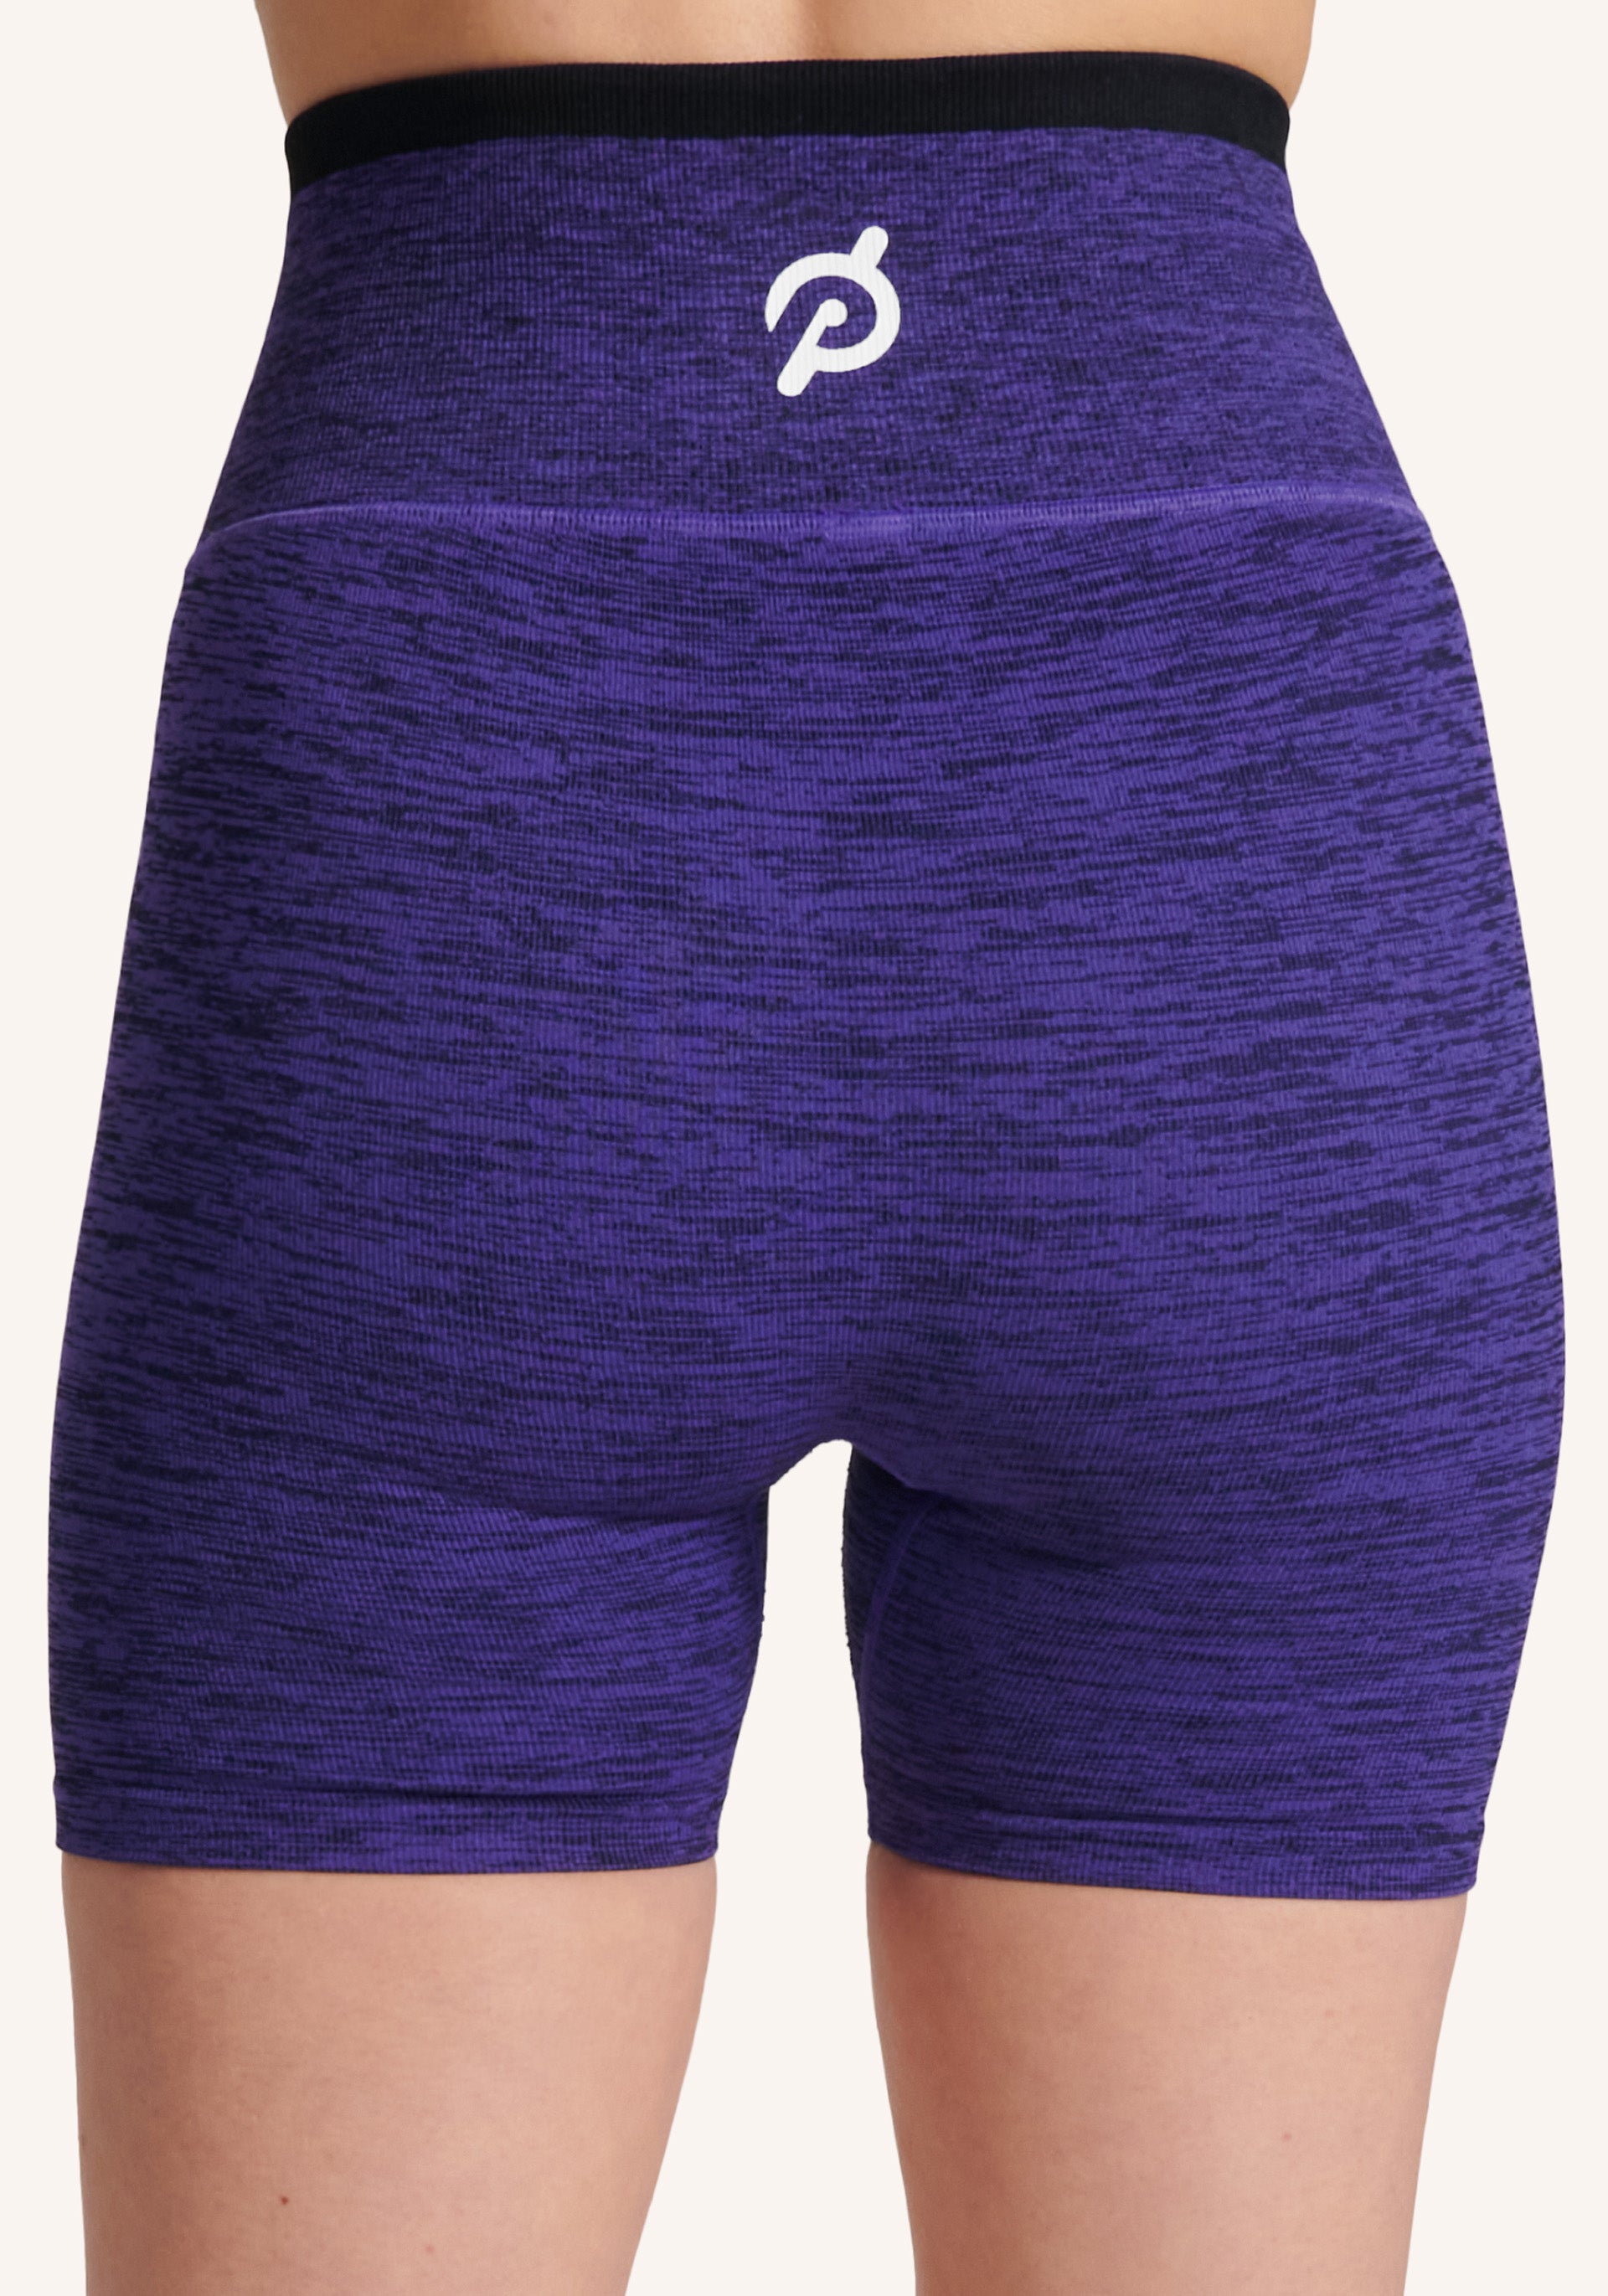  Womens Cycling Underwear Padded Bike Shorts Padding Spin  Biker Briefs Biking Gear Taro Purple Size L